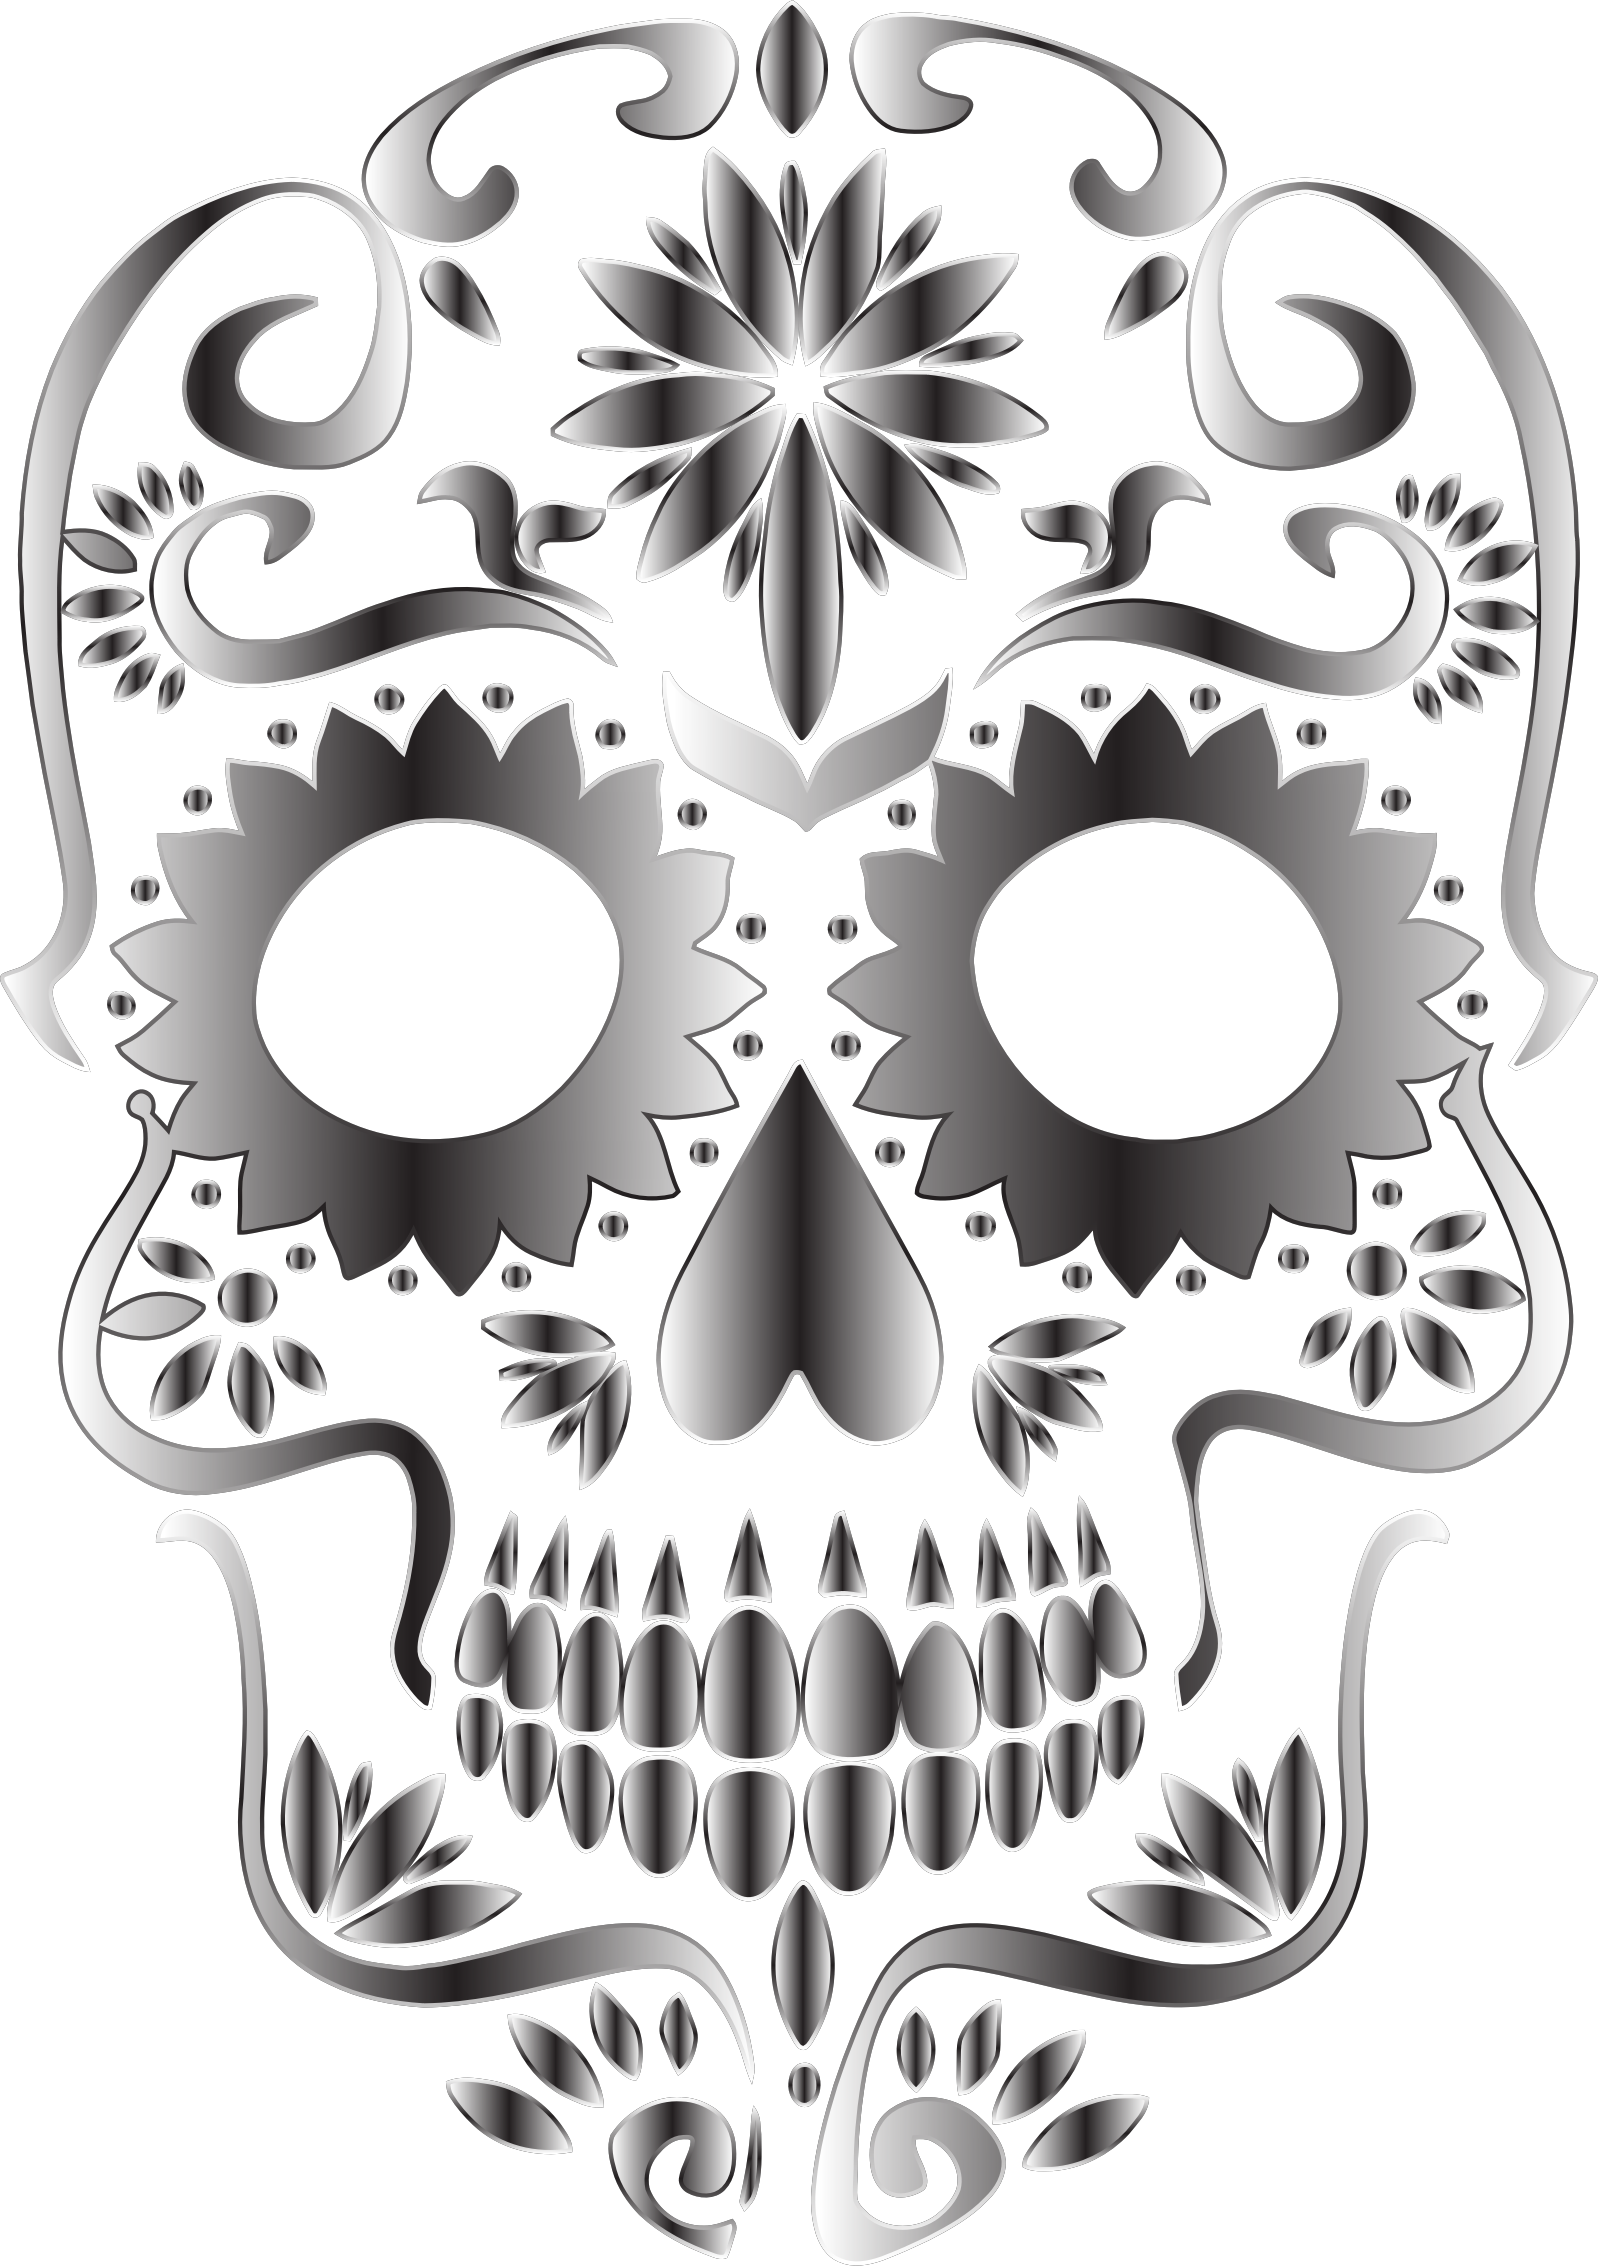 Free Skull Silhouette Cliparts, Download Free Clip Art, Free Clip Art